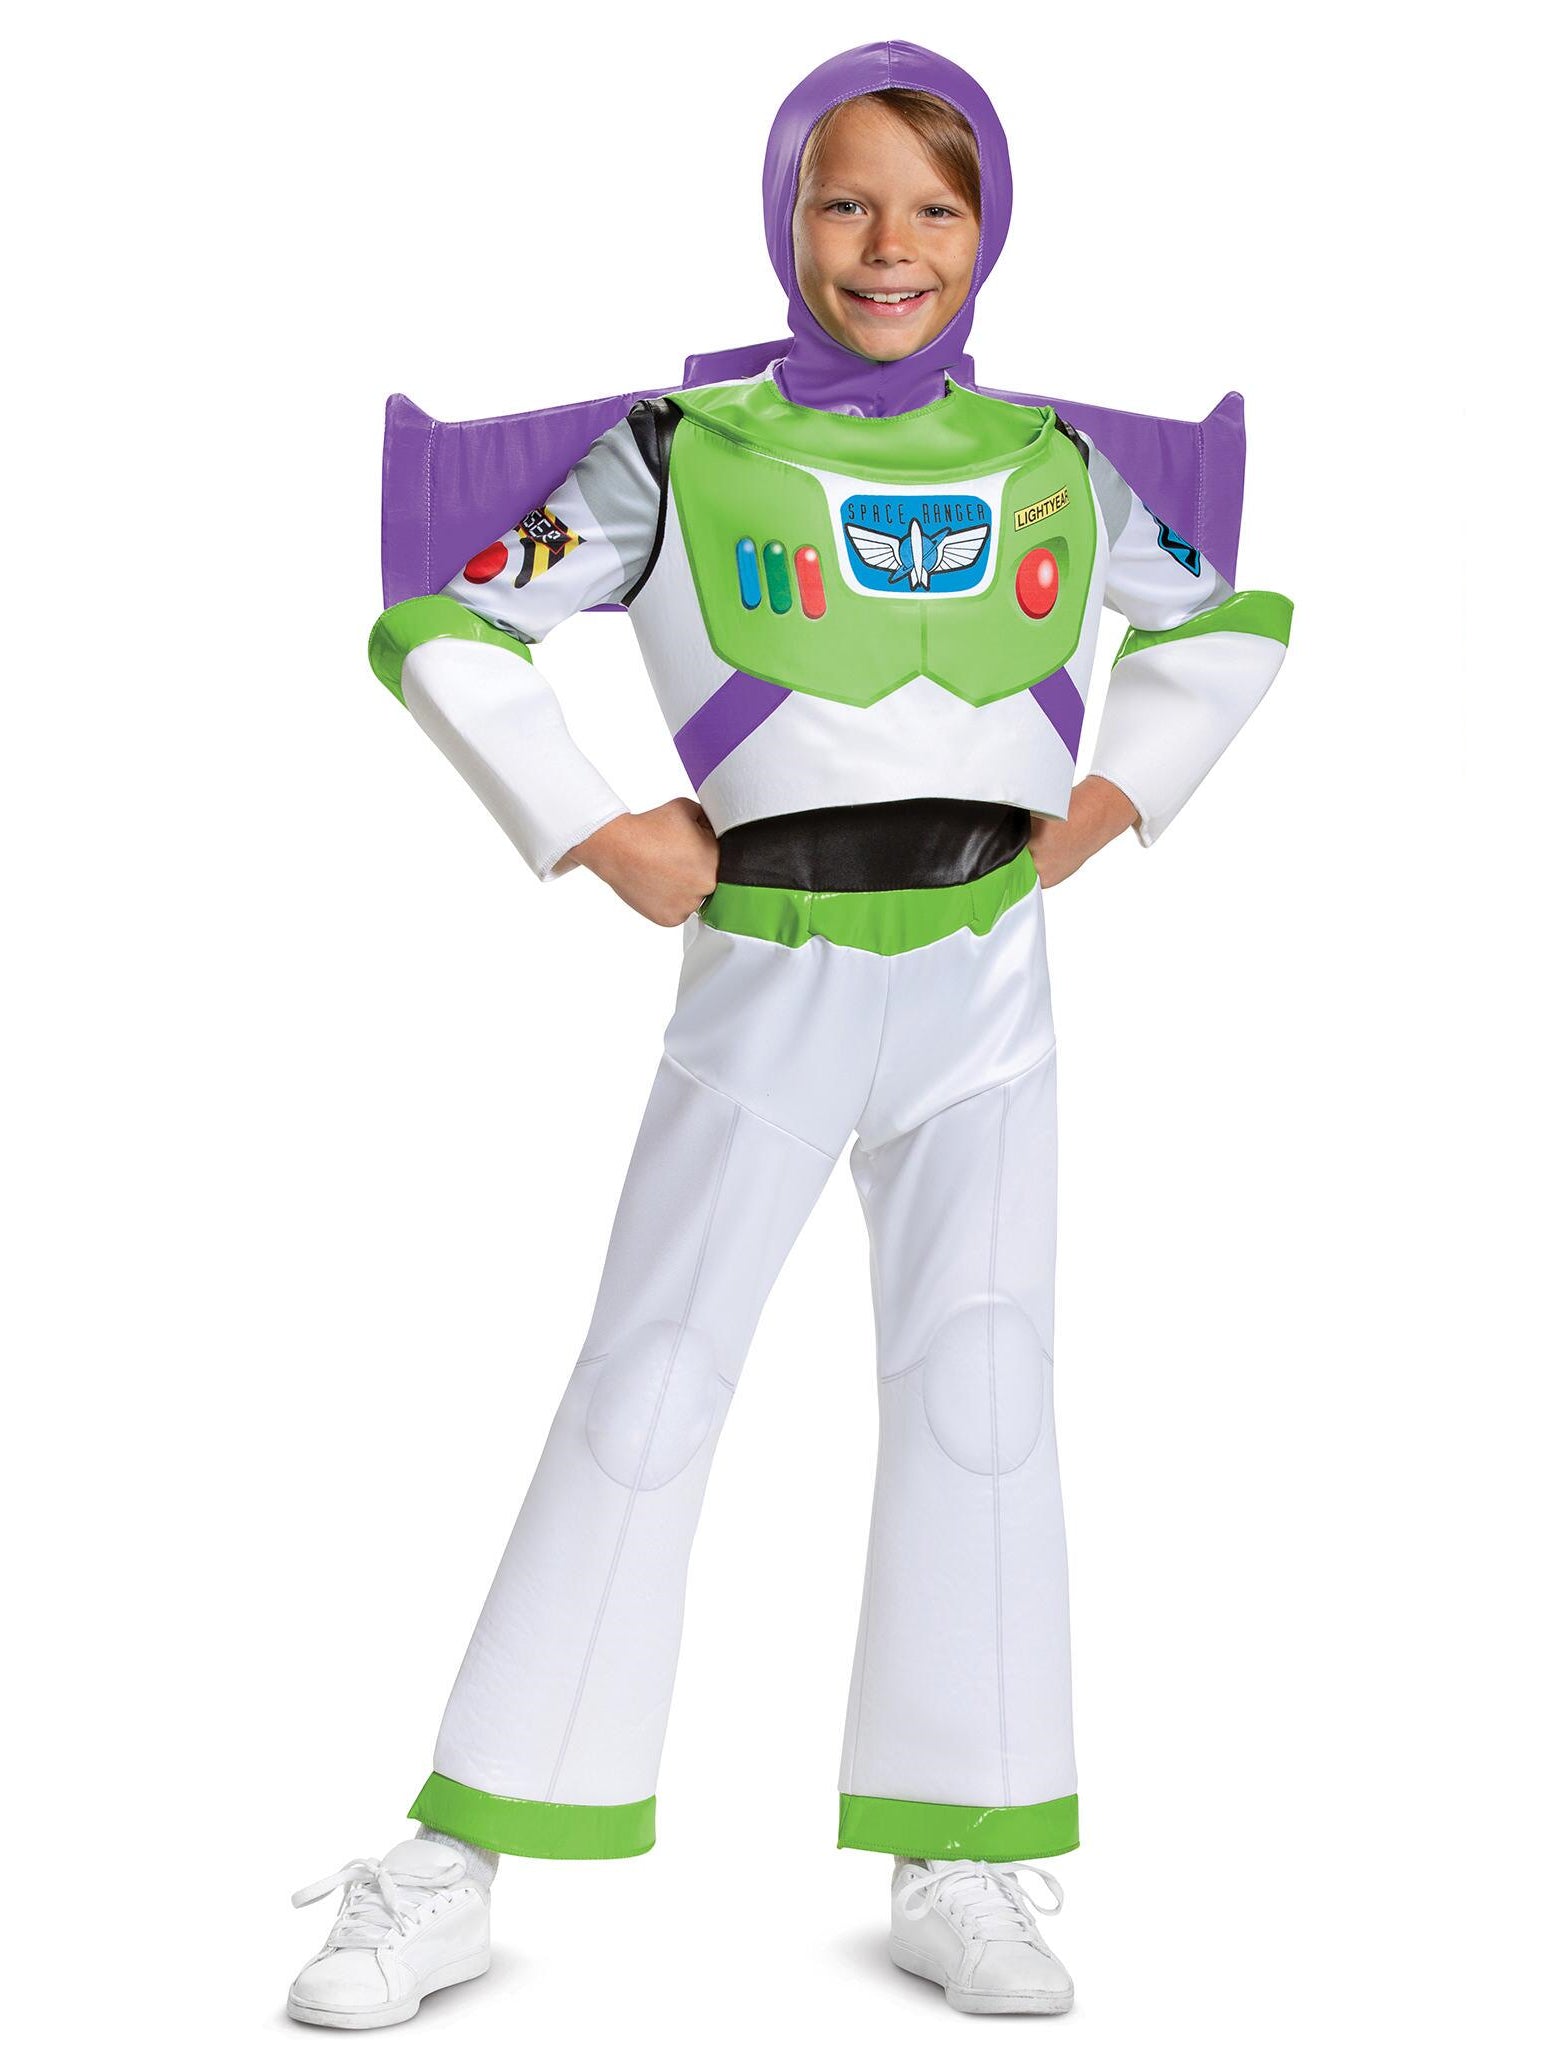 Buzz Lightyear Costume for Kids 